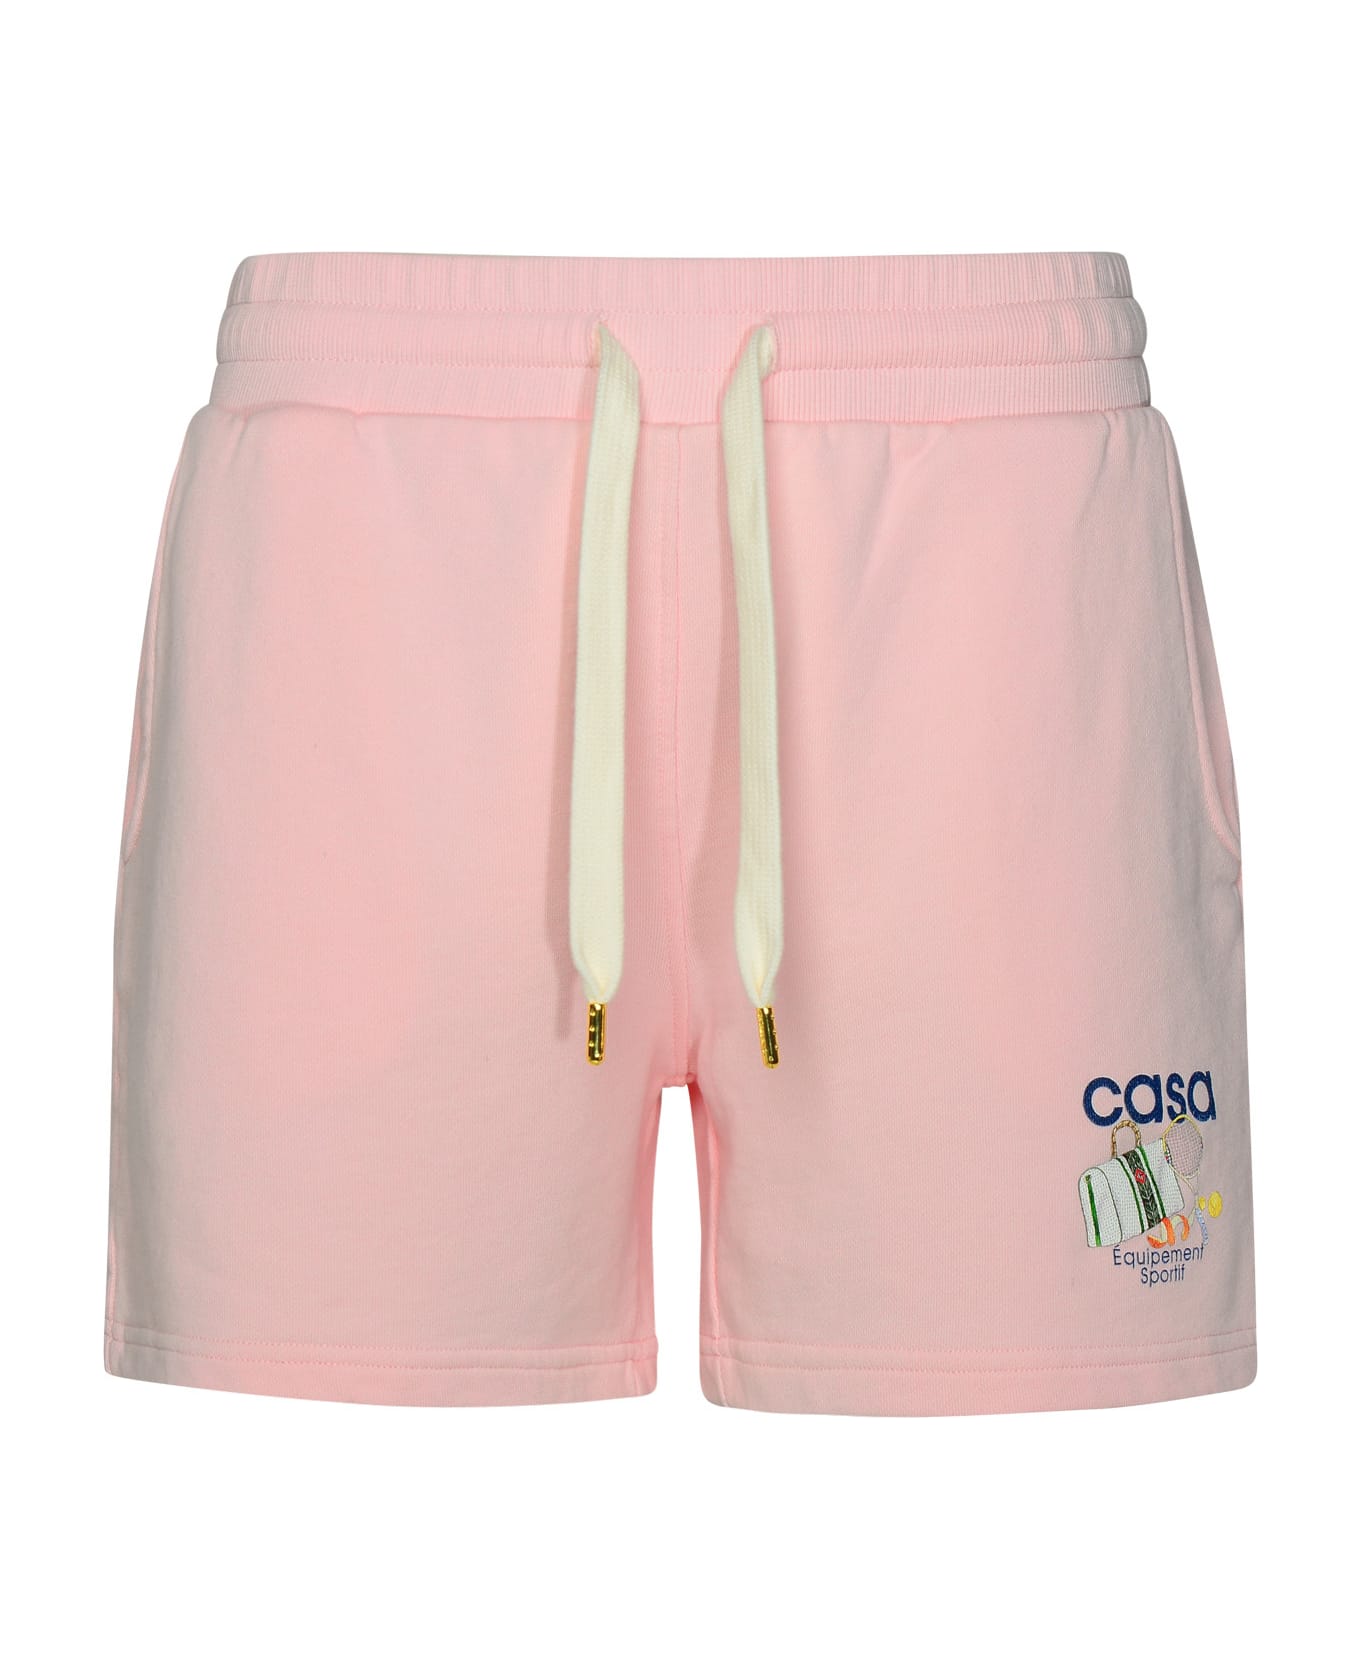 Casablanca 'equipement Sportif' Pink Organic Cotton Shorts - Pink ショートパンツ